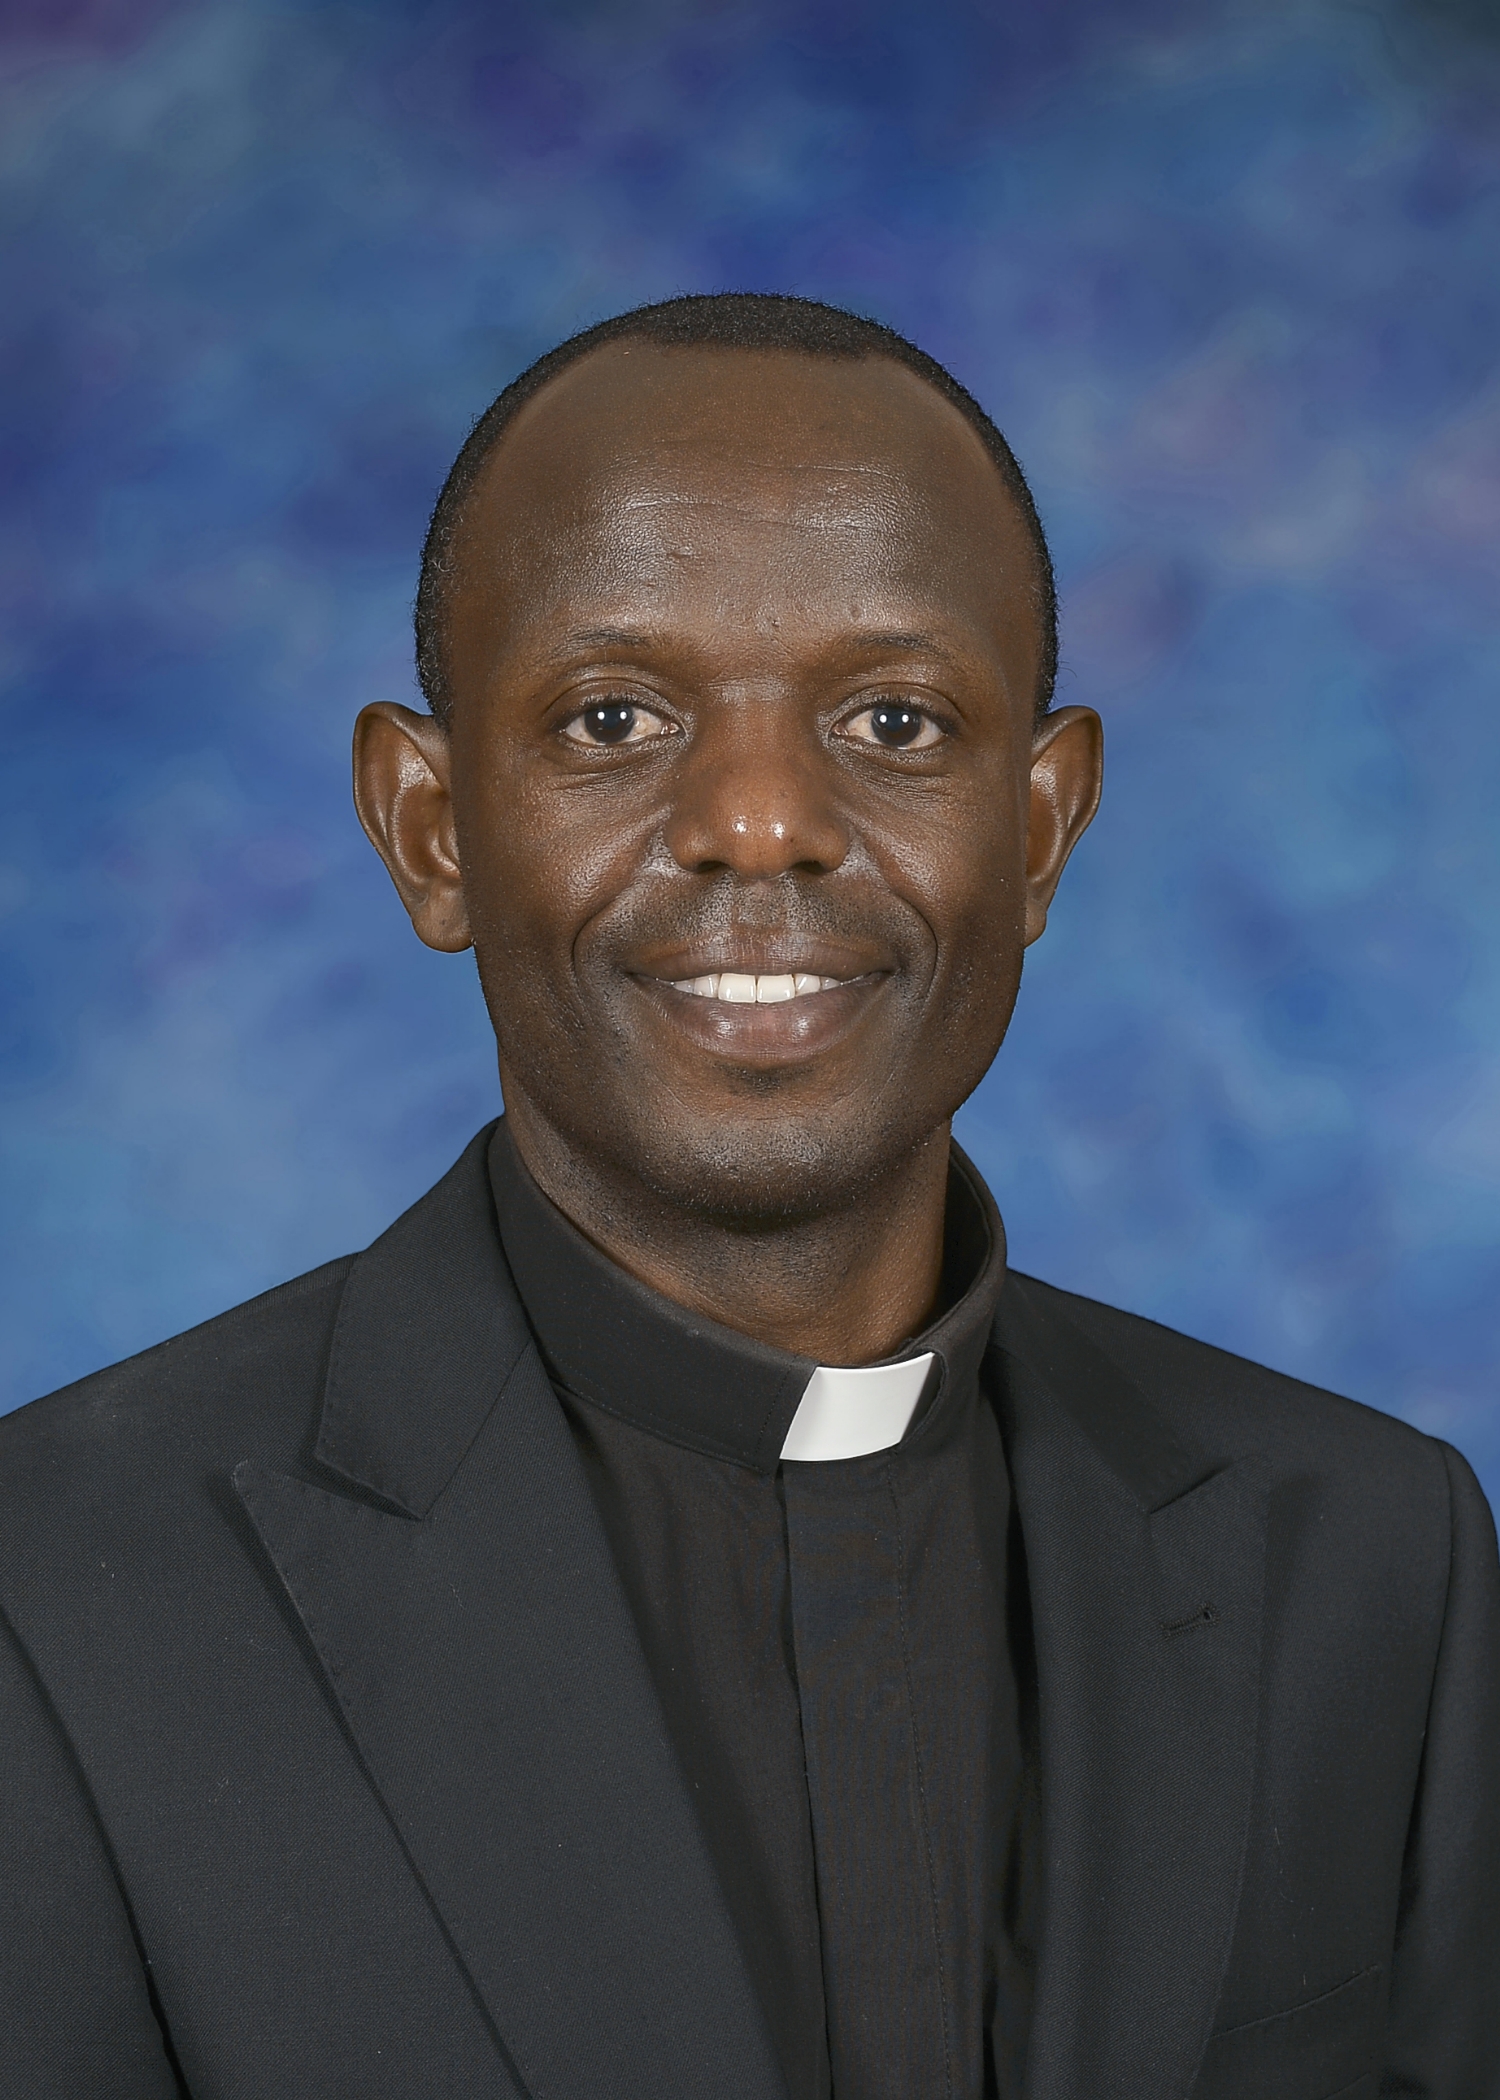 Fr. GIlbert Mashurano